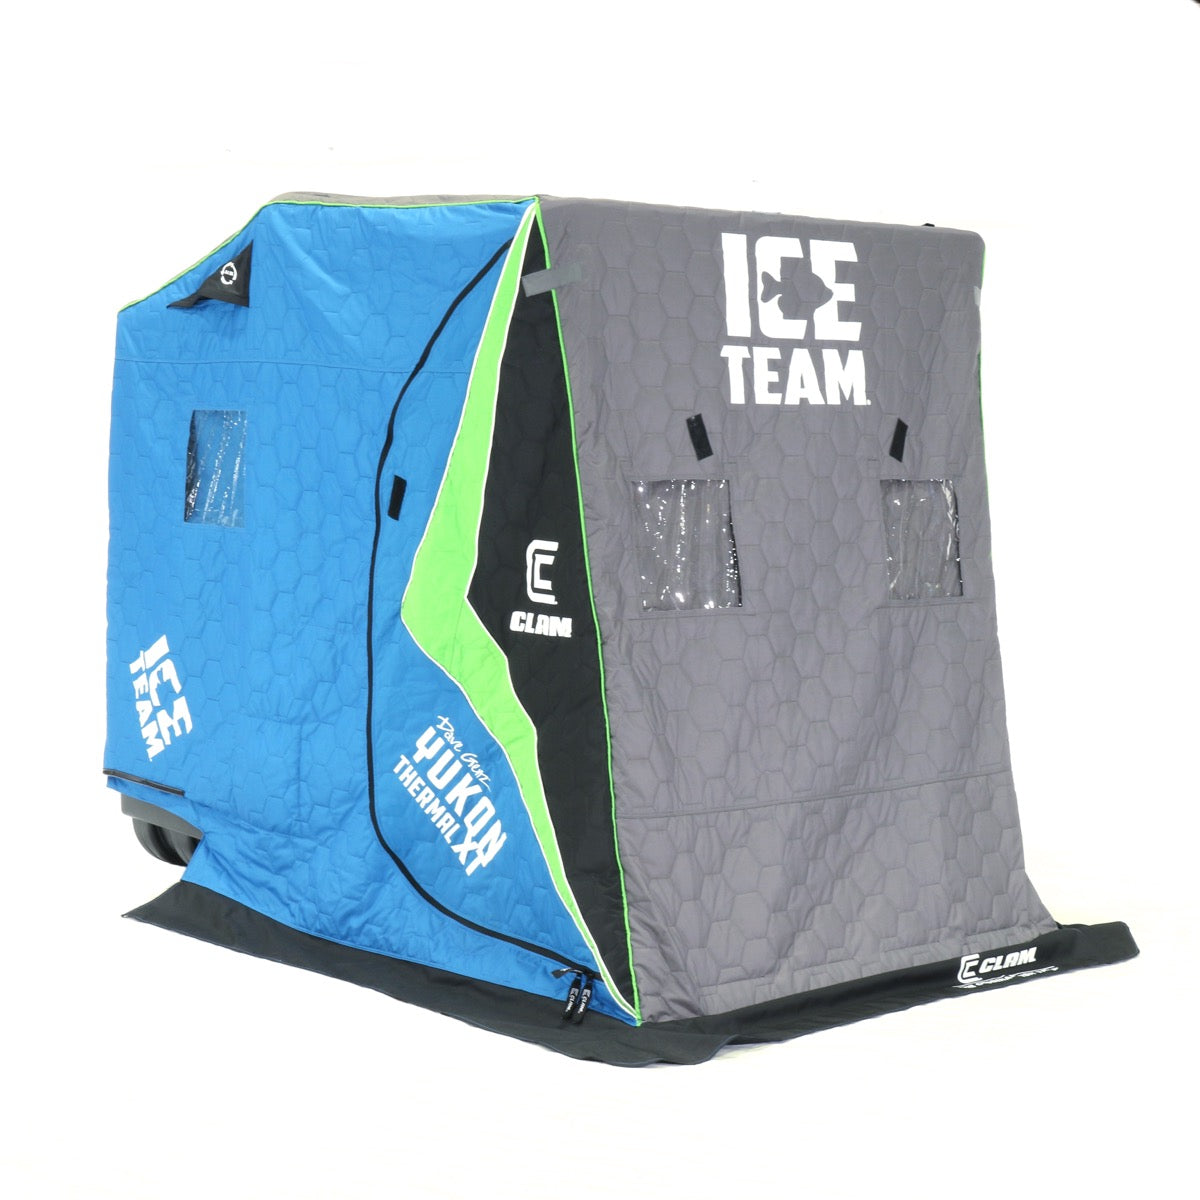 Clam Yukon XT Thermal Ice Team Edition